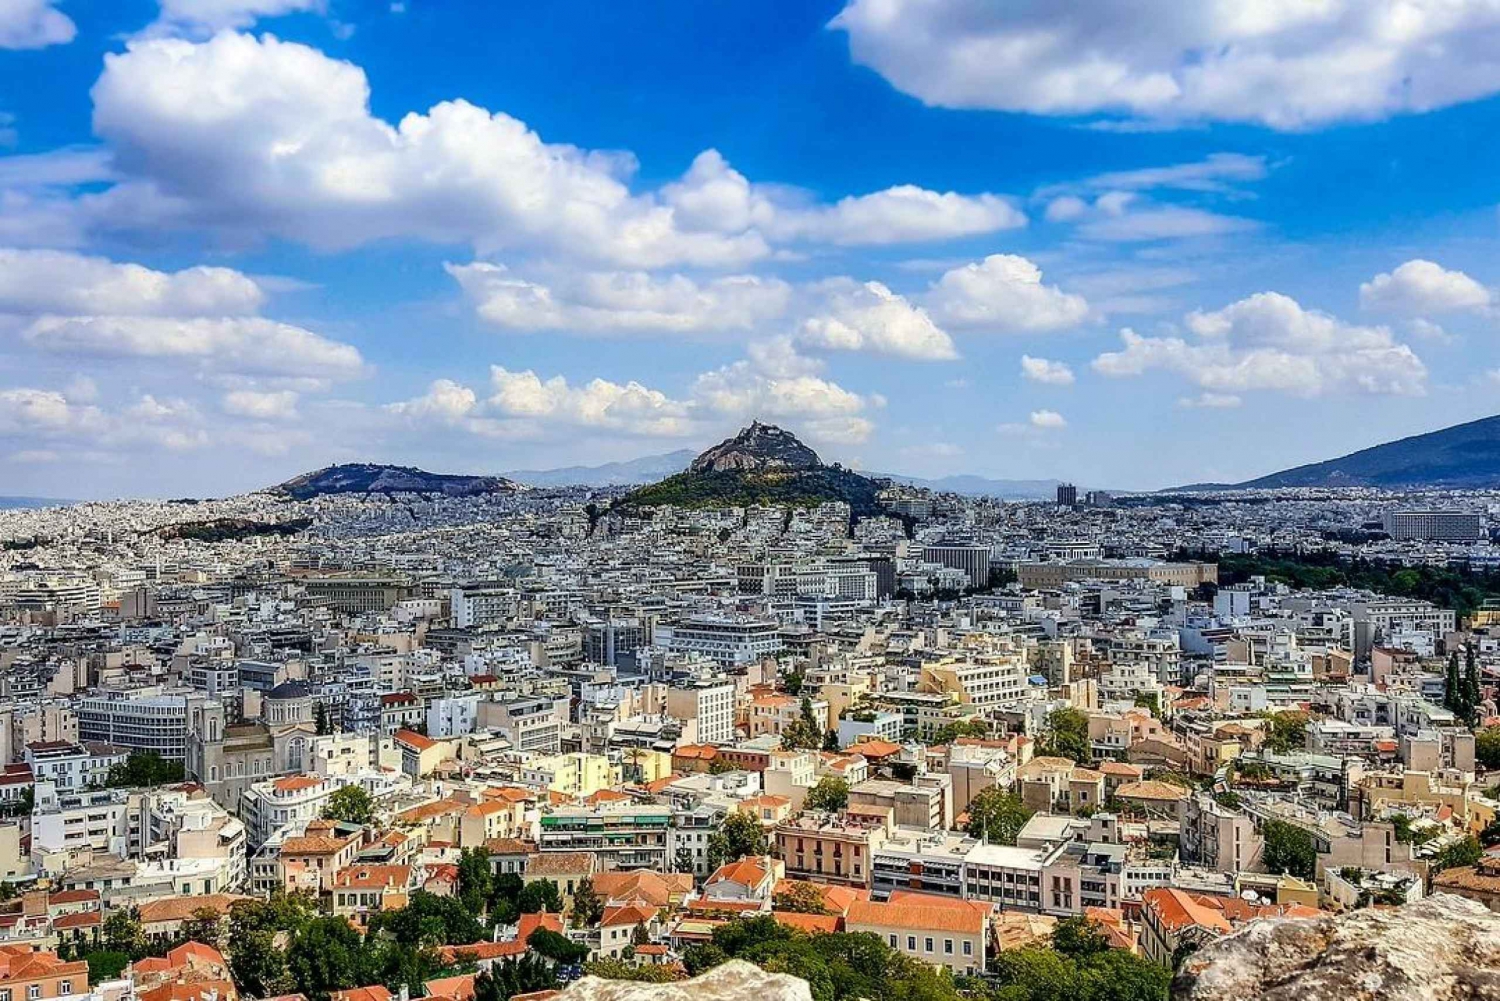 Atenas: Tour clásico privado de día completo